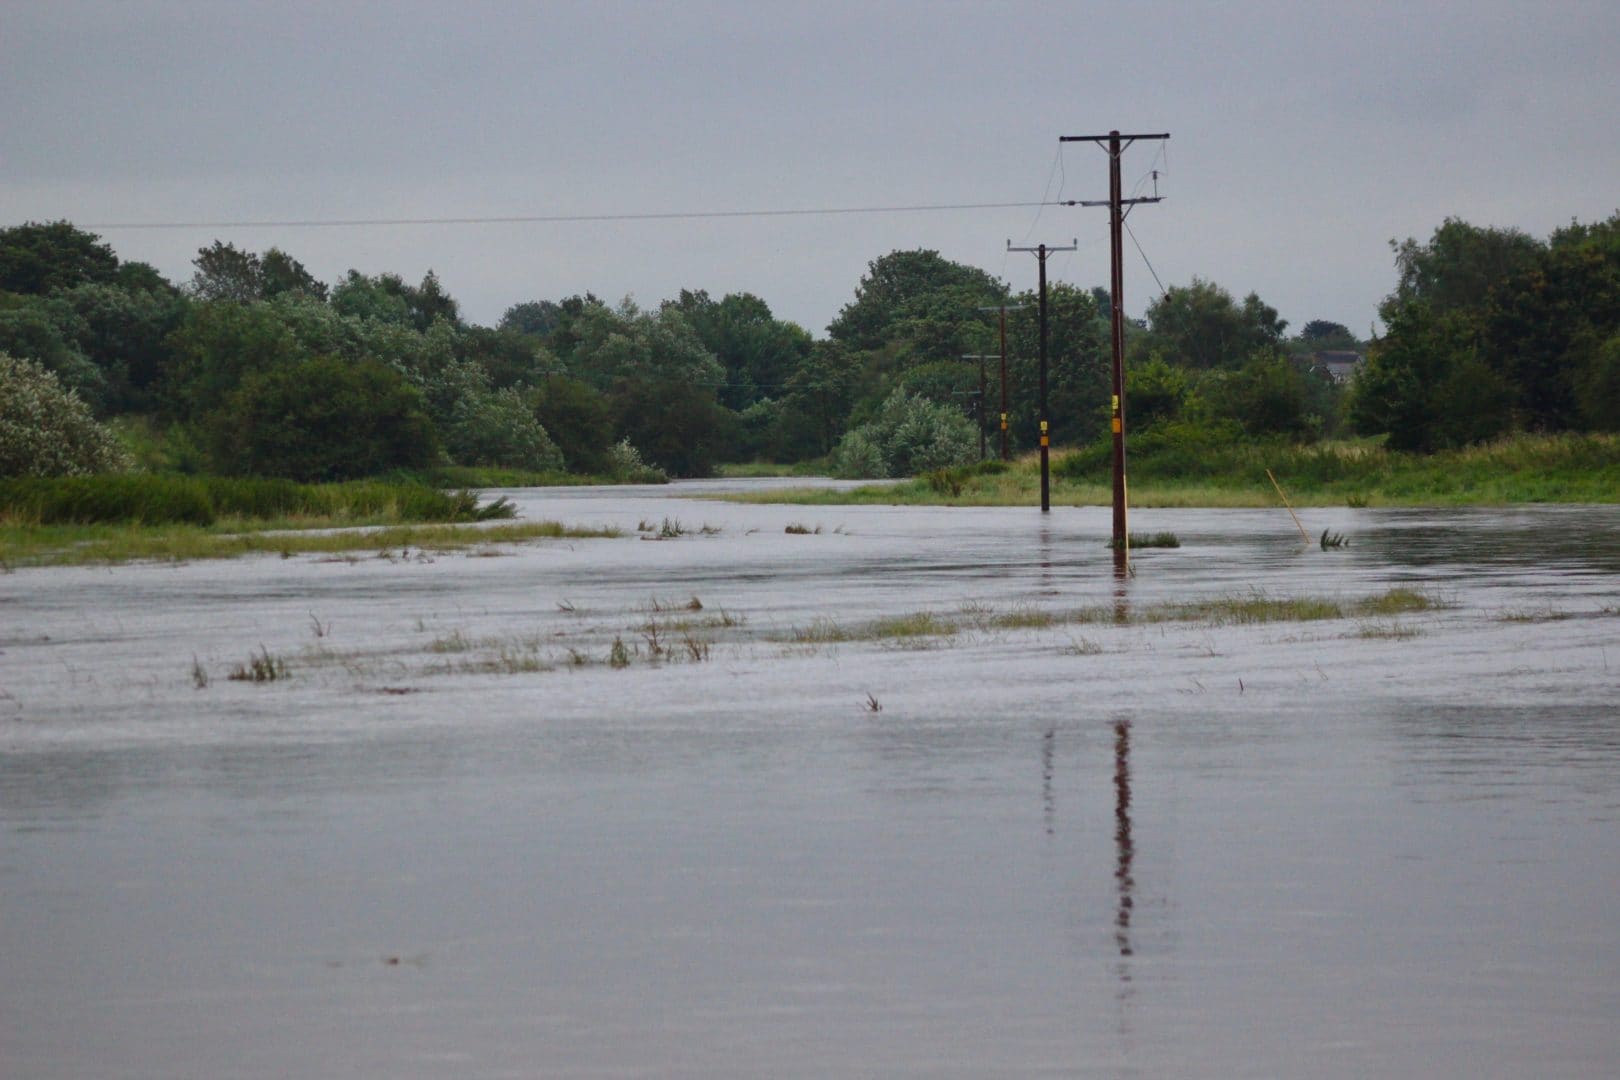 Flooded field after heavy rain